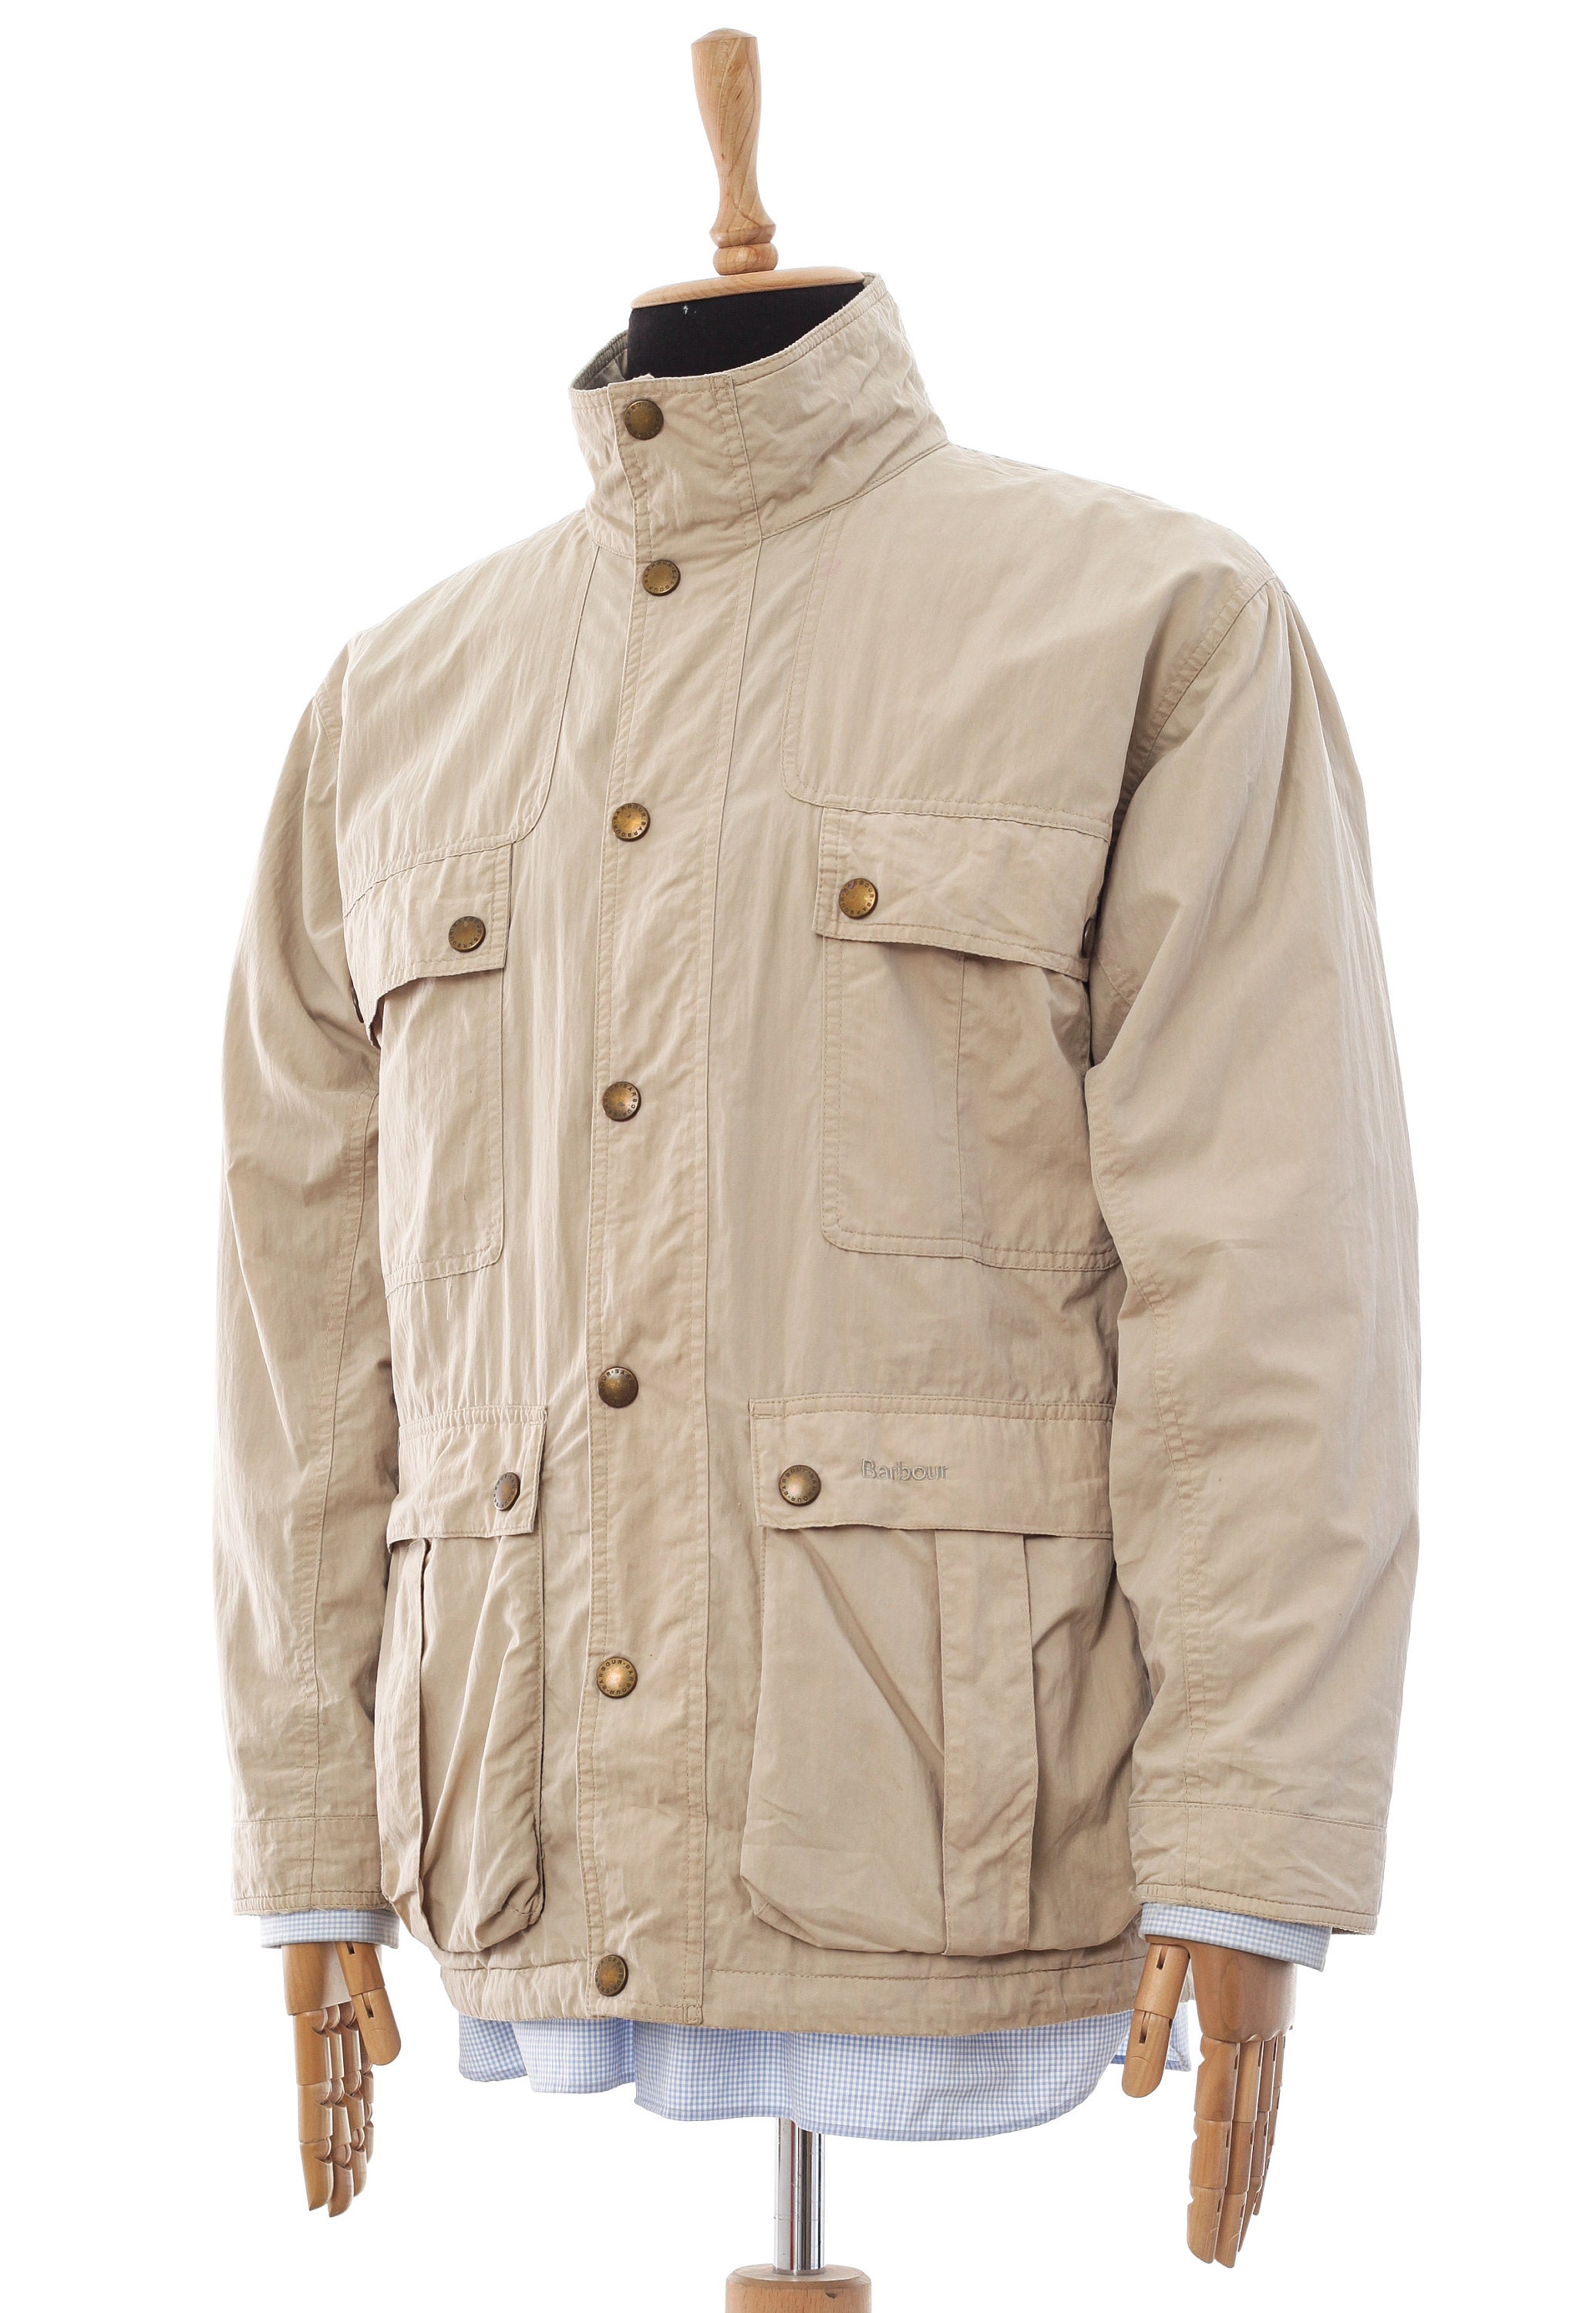 Mens BARBOUR 4 Pocket Traveller Safari Jacket Coat Field Shell | Etsy